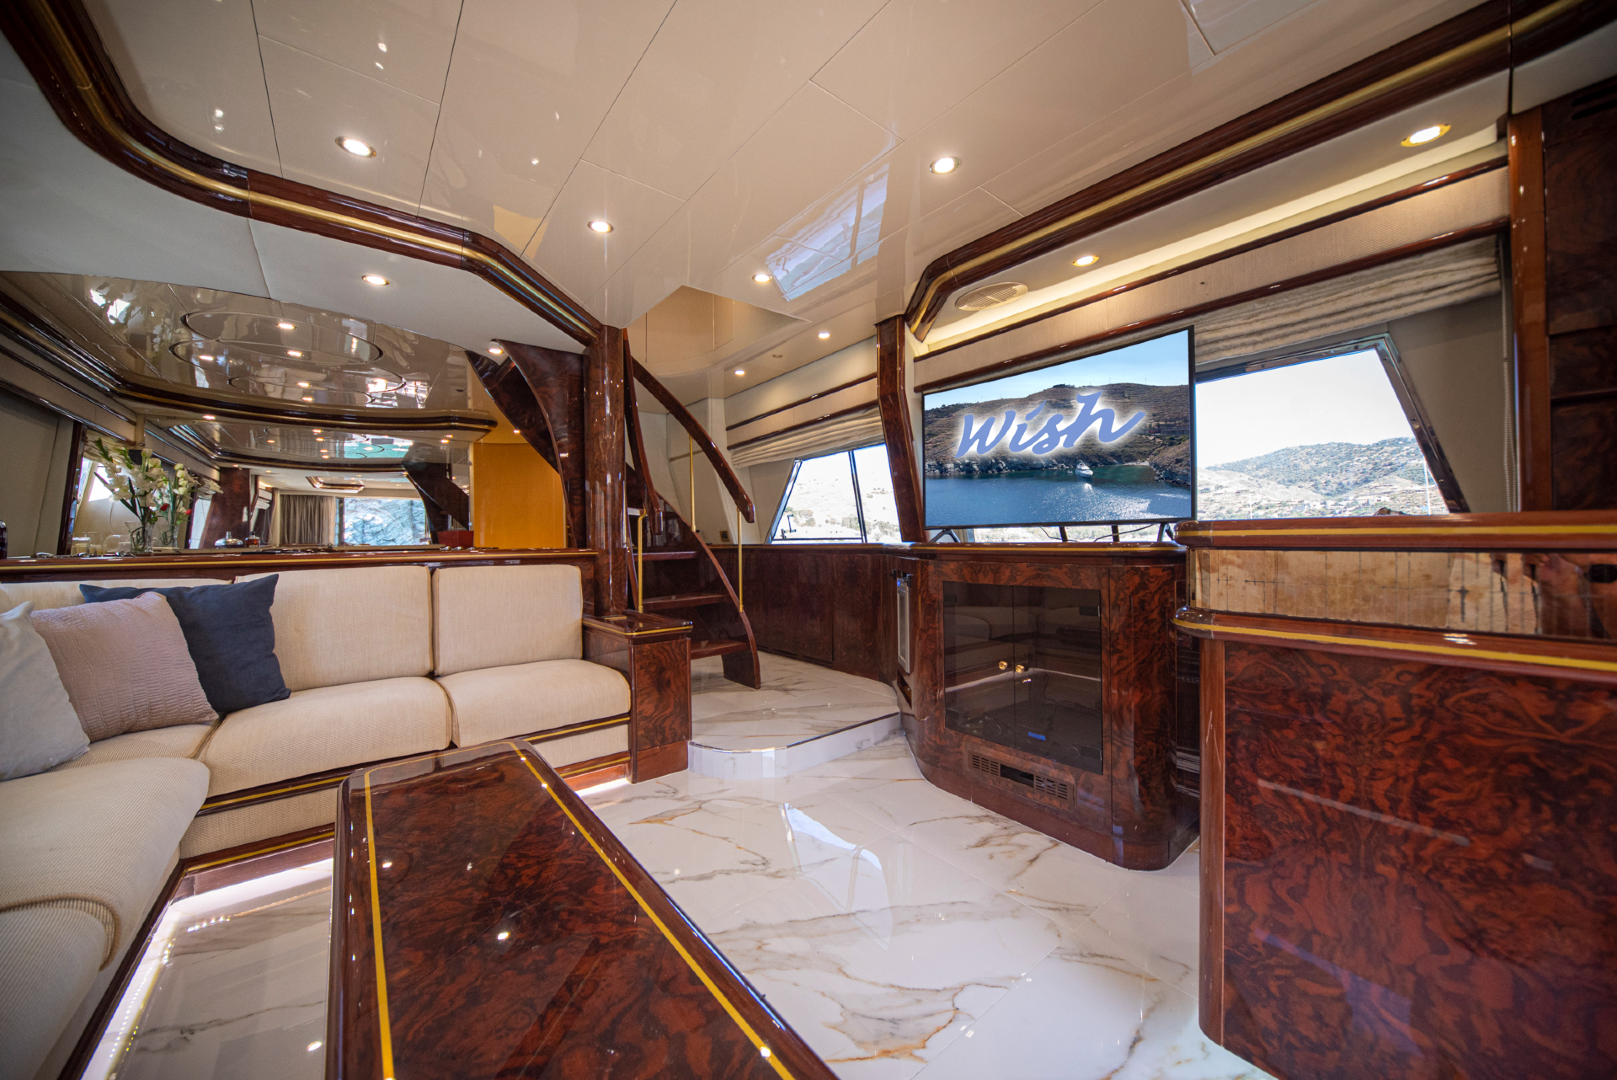 luxury-motor-yacht-Wish-tv